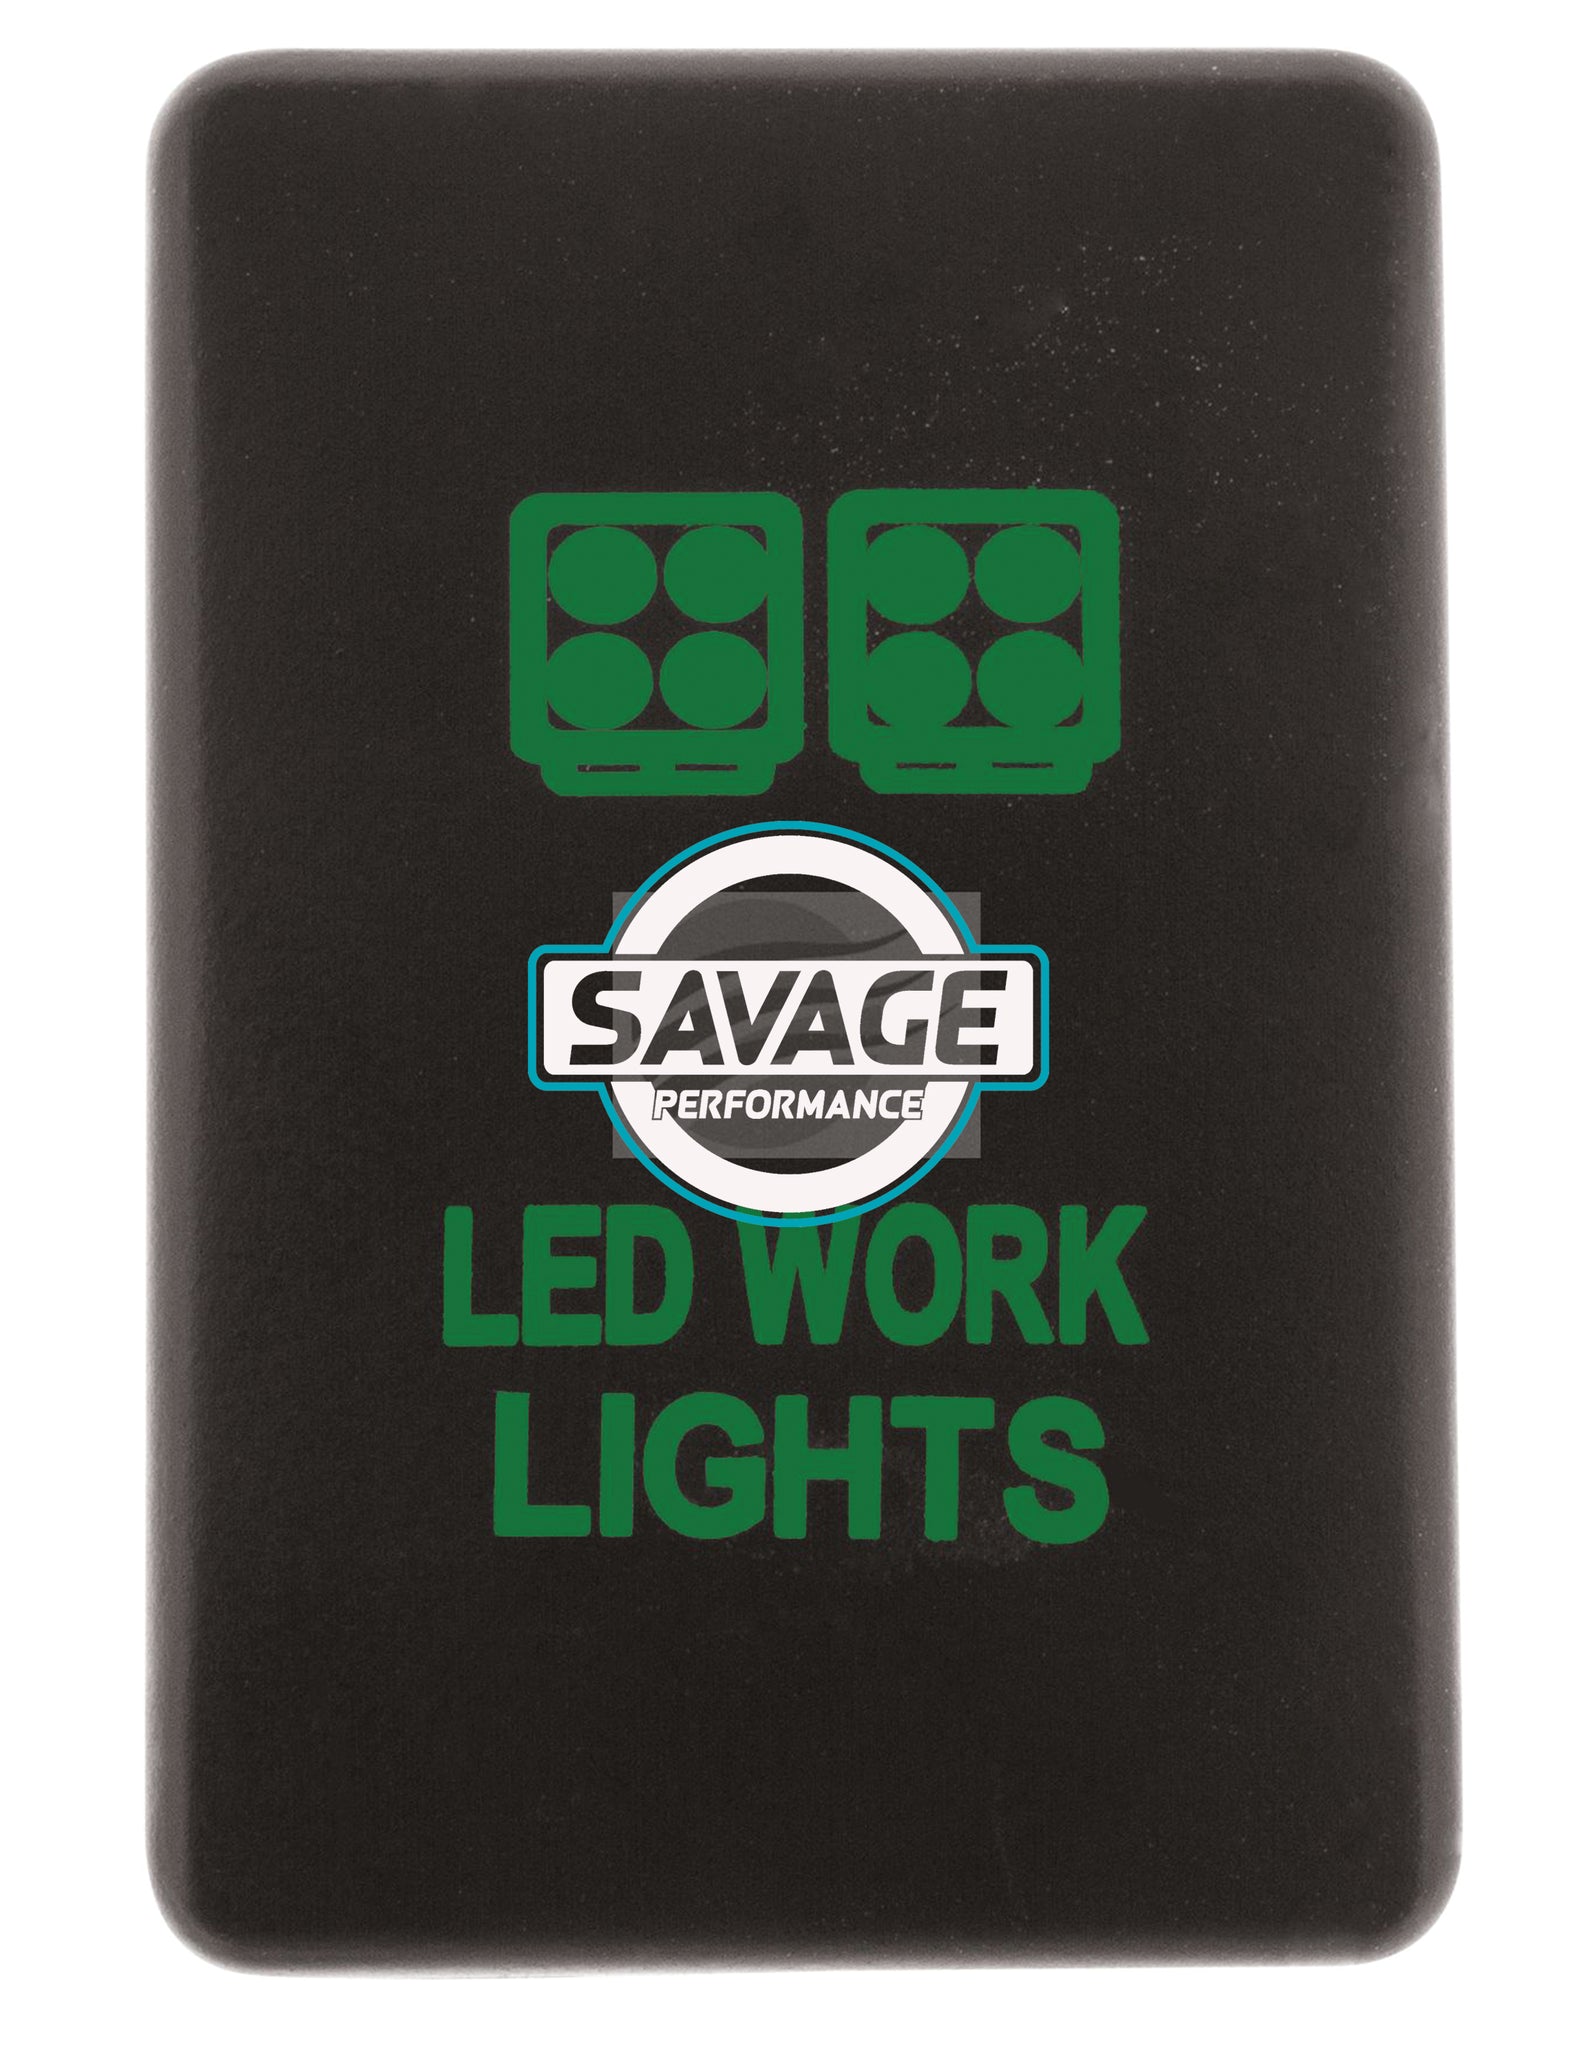 Jaylec - LED Work Lights Switch - GREEN - Hilux GUN Series (2015 on)